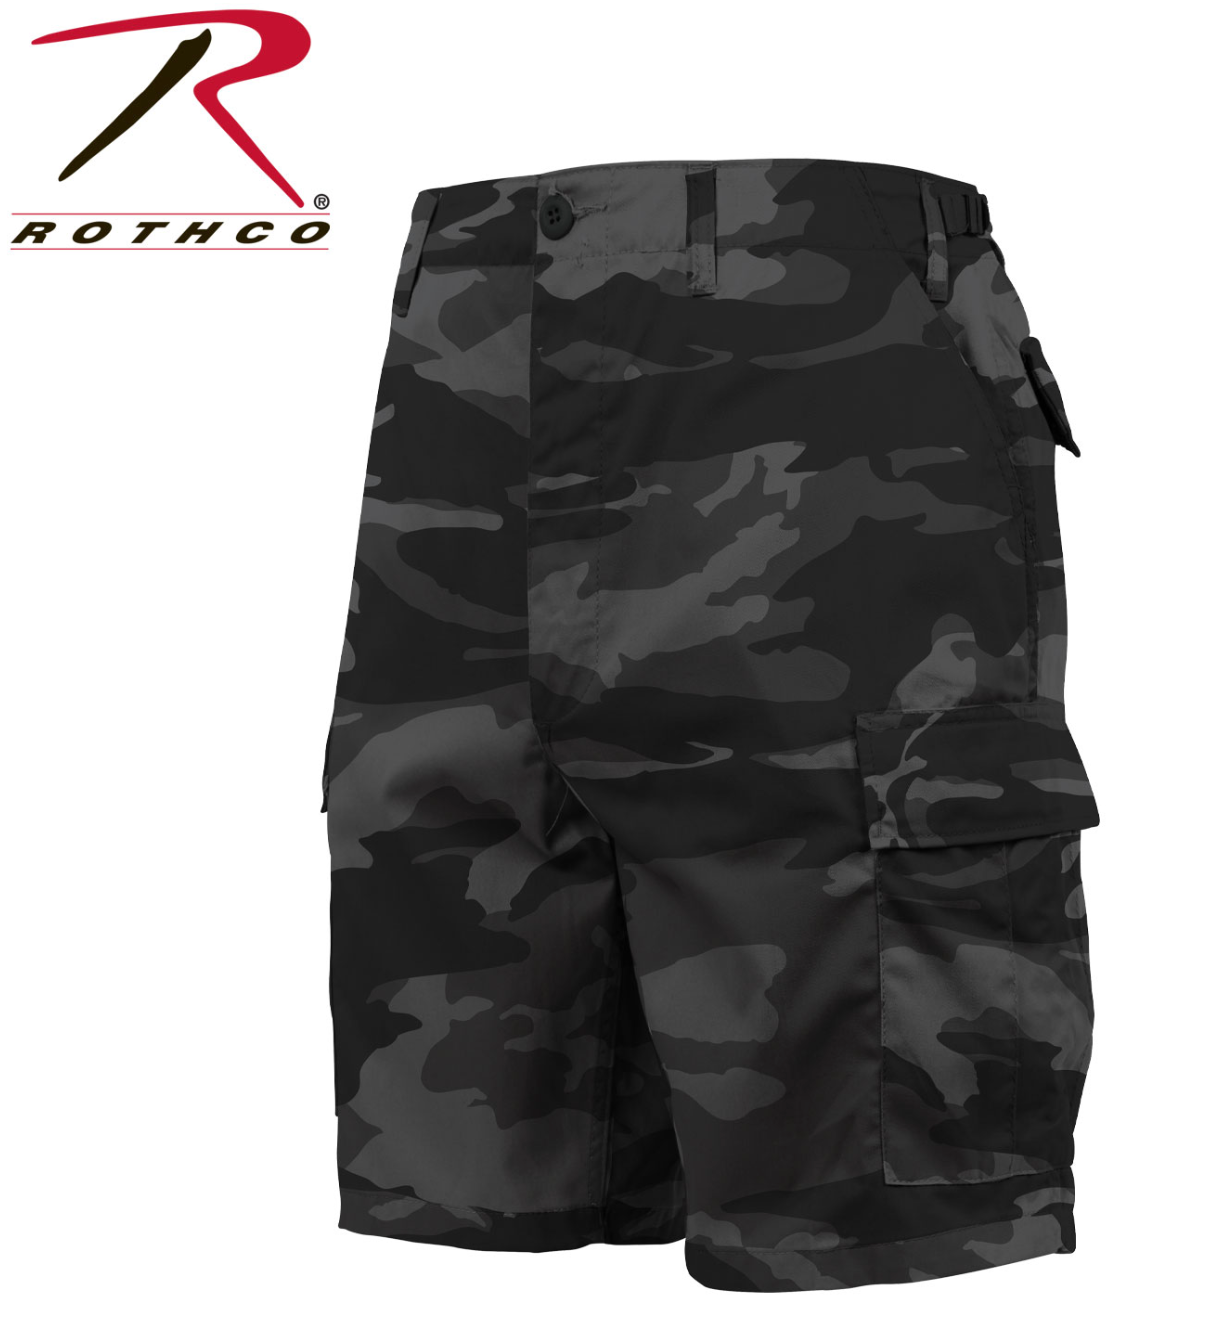 Rothco Black/Grey Camo BDU Shorts